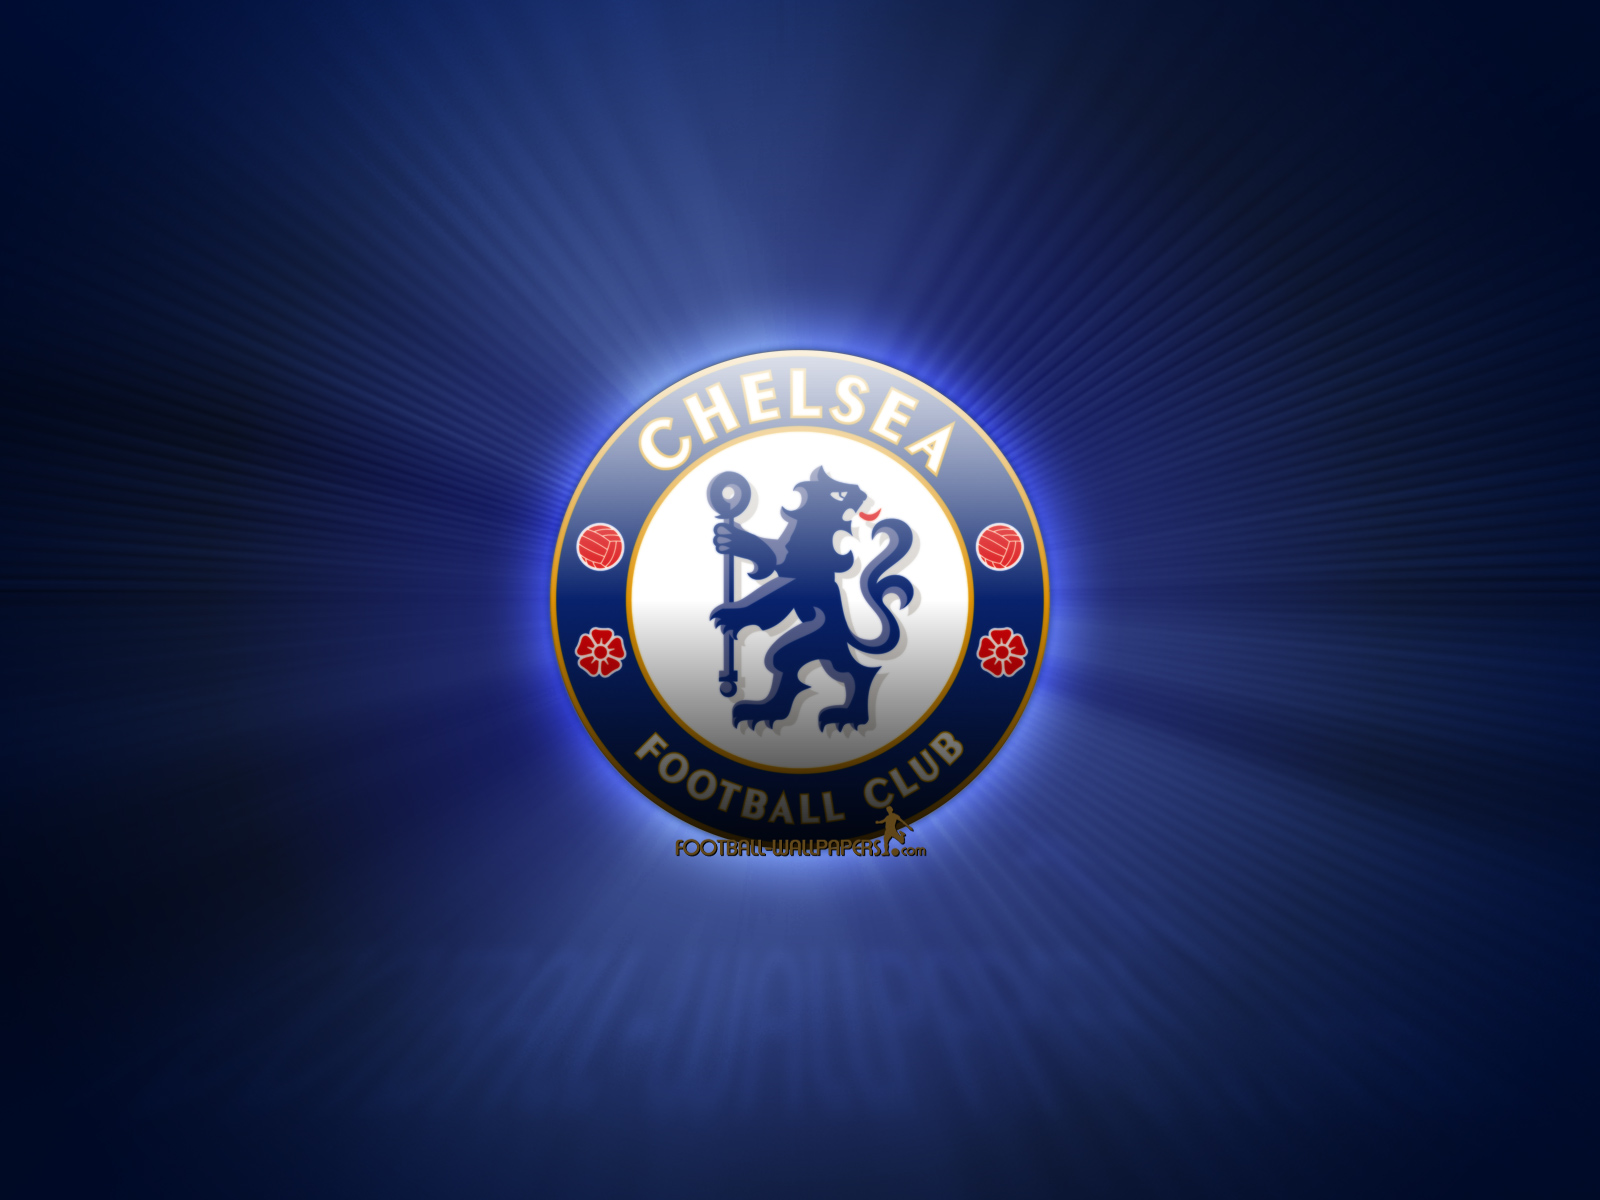 Chelsea The Best Football Club in Europe 2012 - Best Football Club